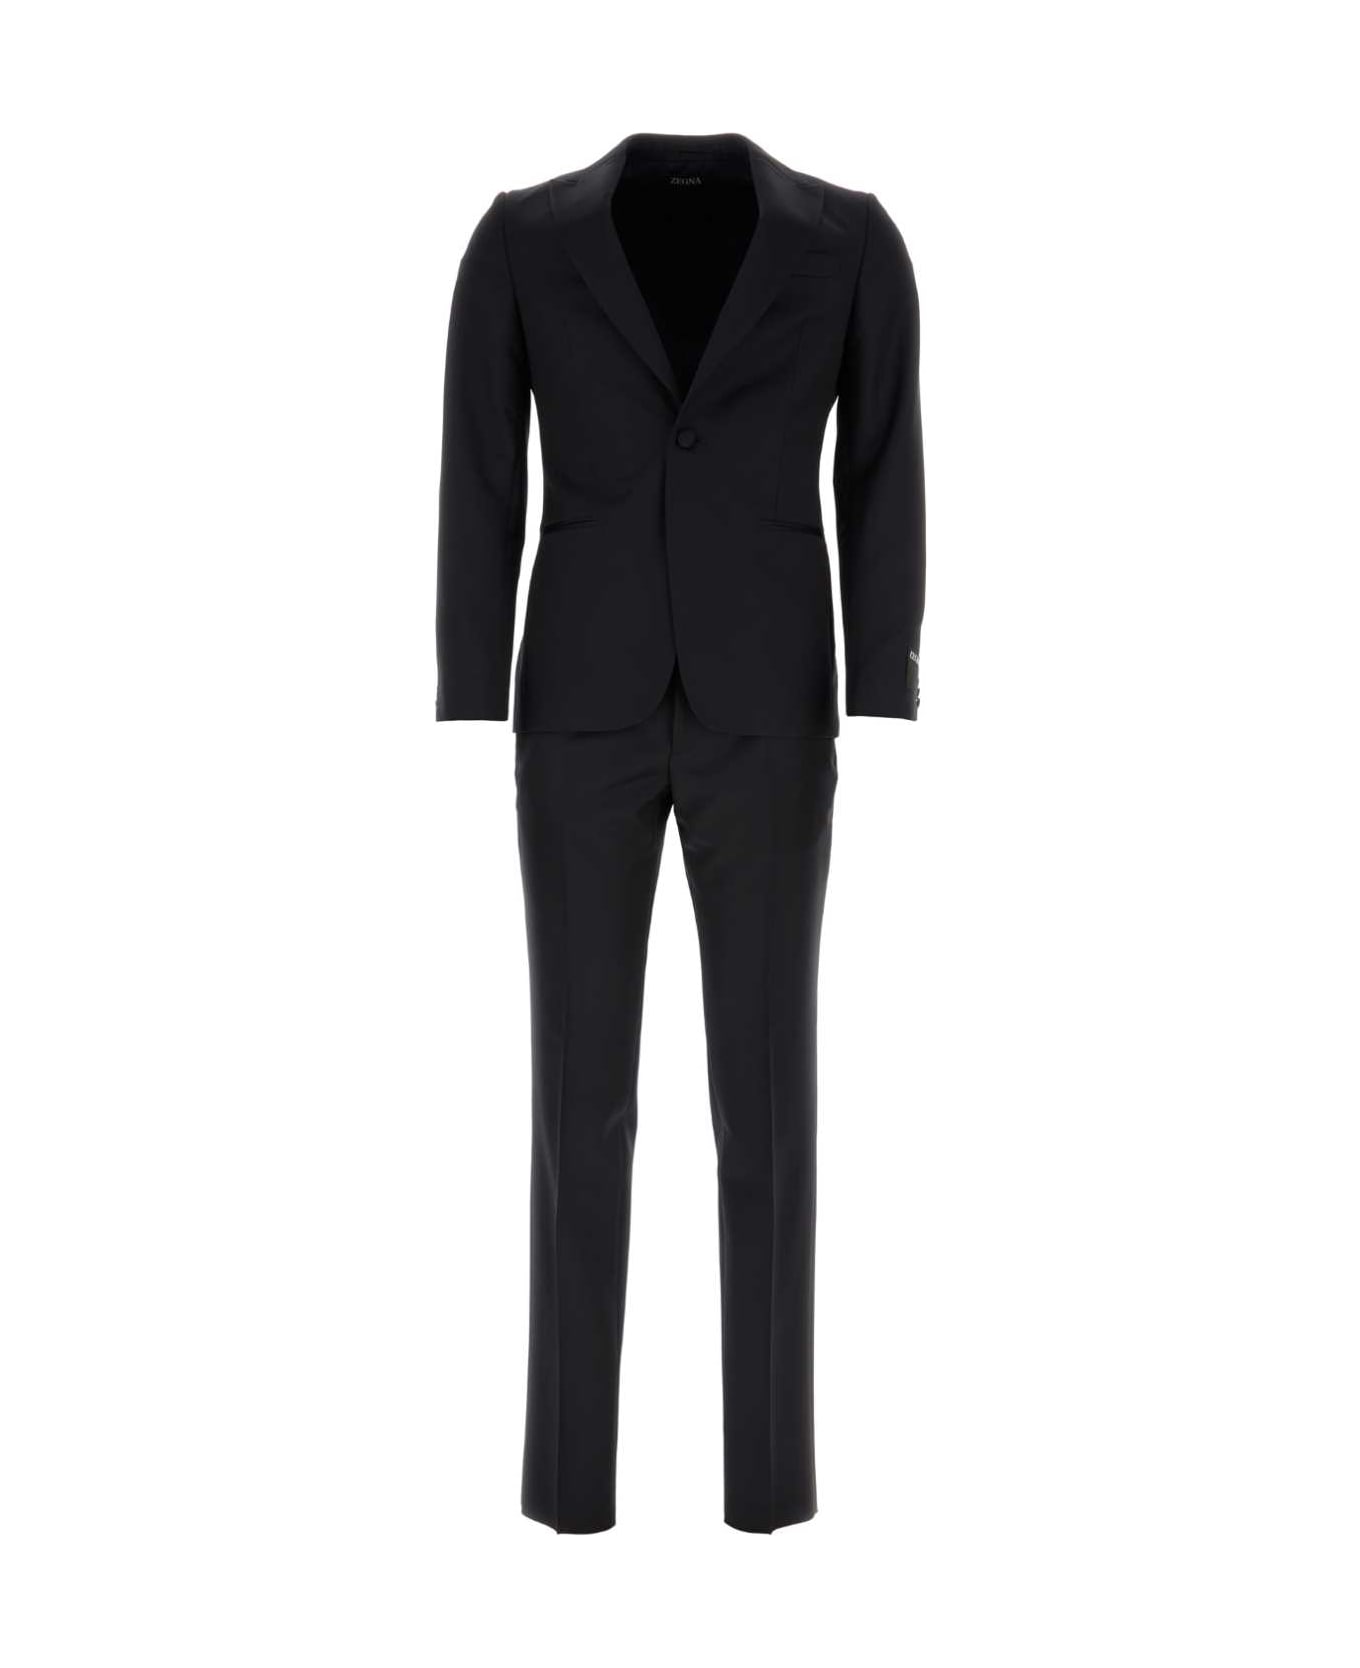 Zegna Midnight Blue Wool Blend Suit - 8R スーツ